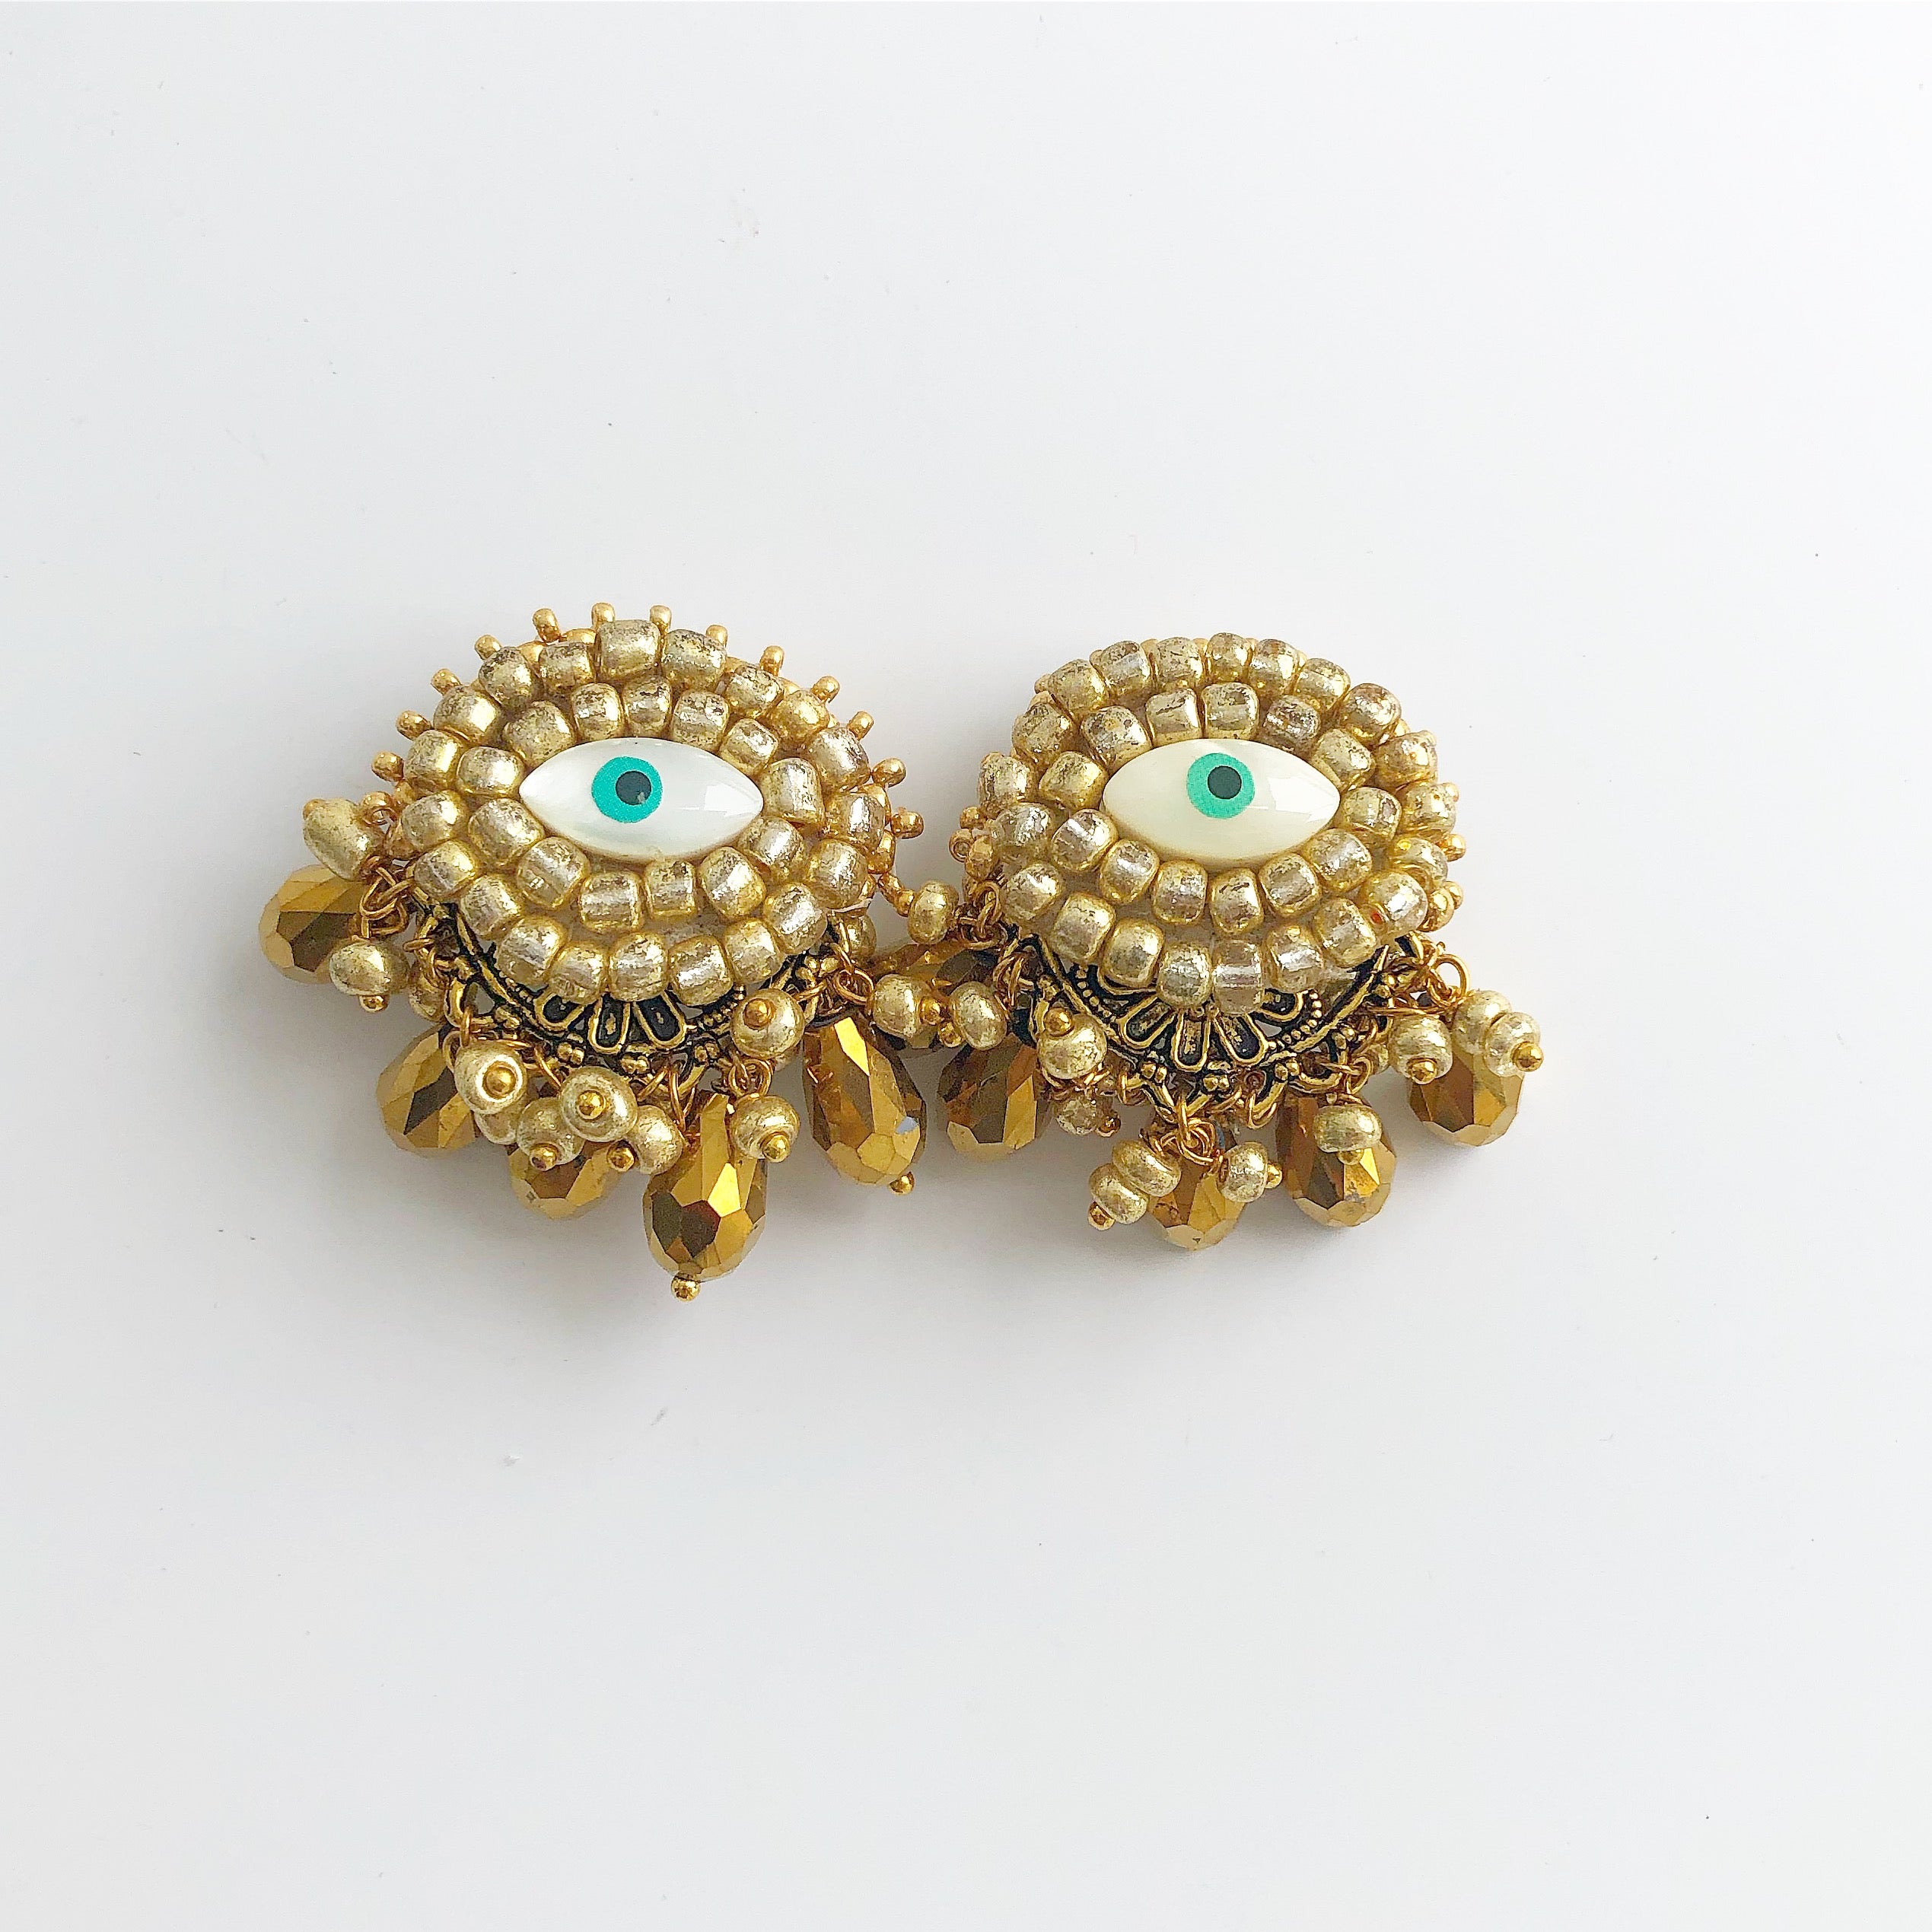 rock + bone handmade statement earrings Mini Evil Eyes